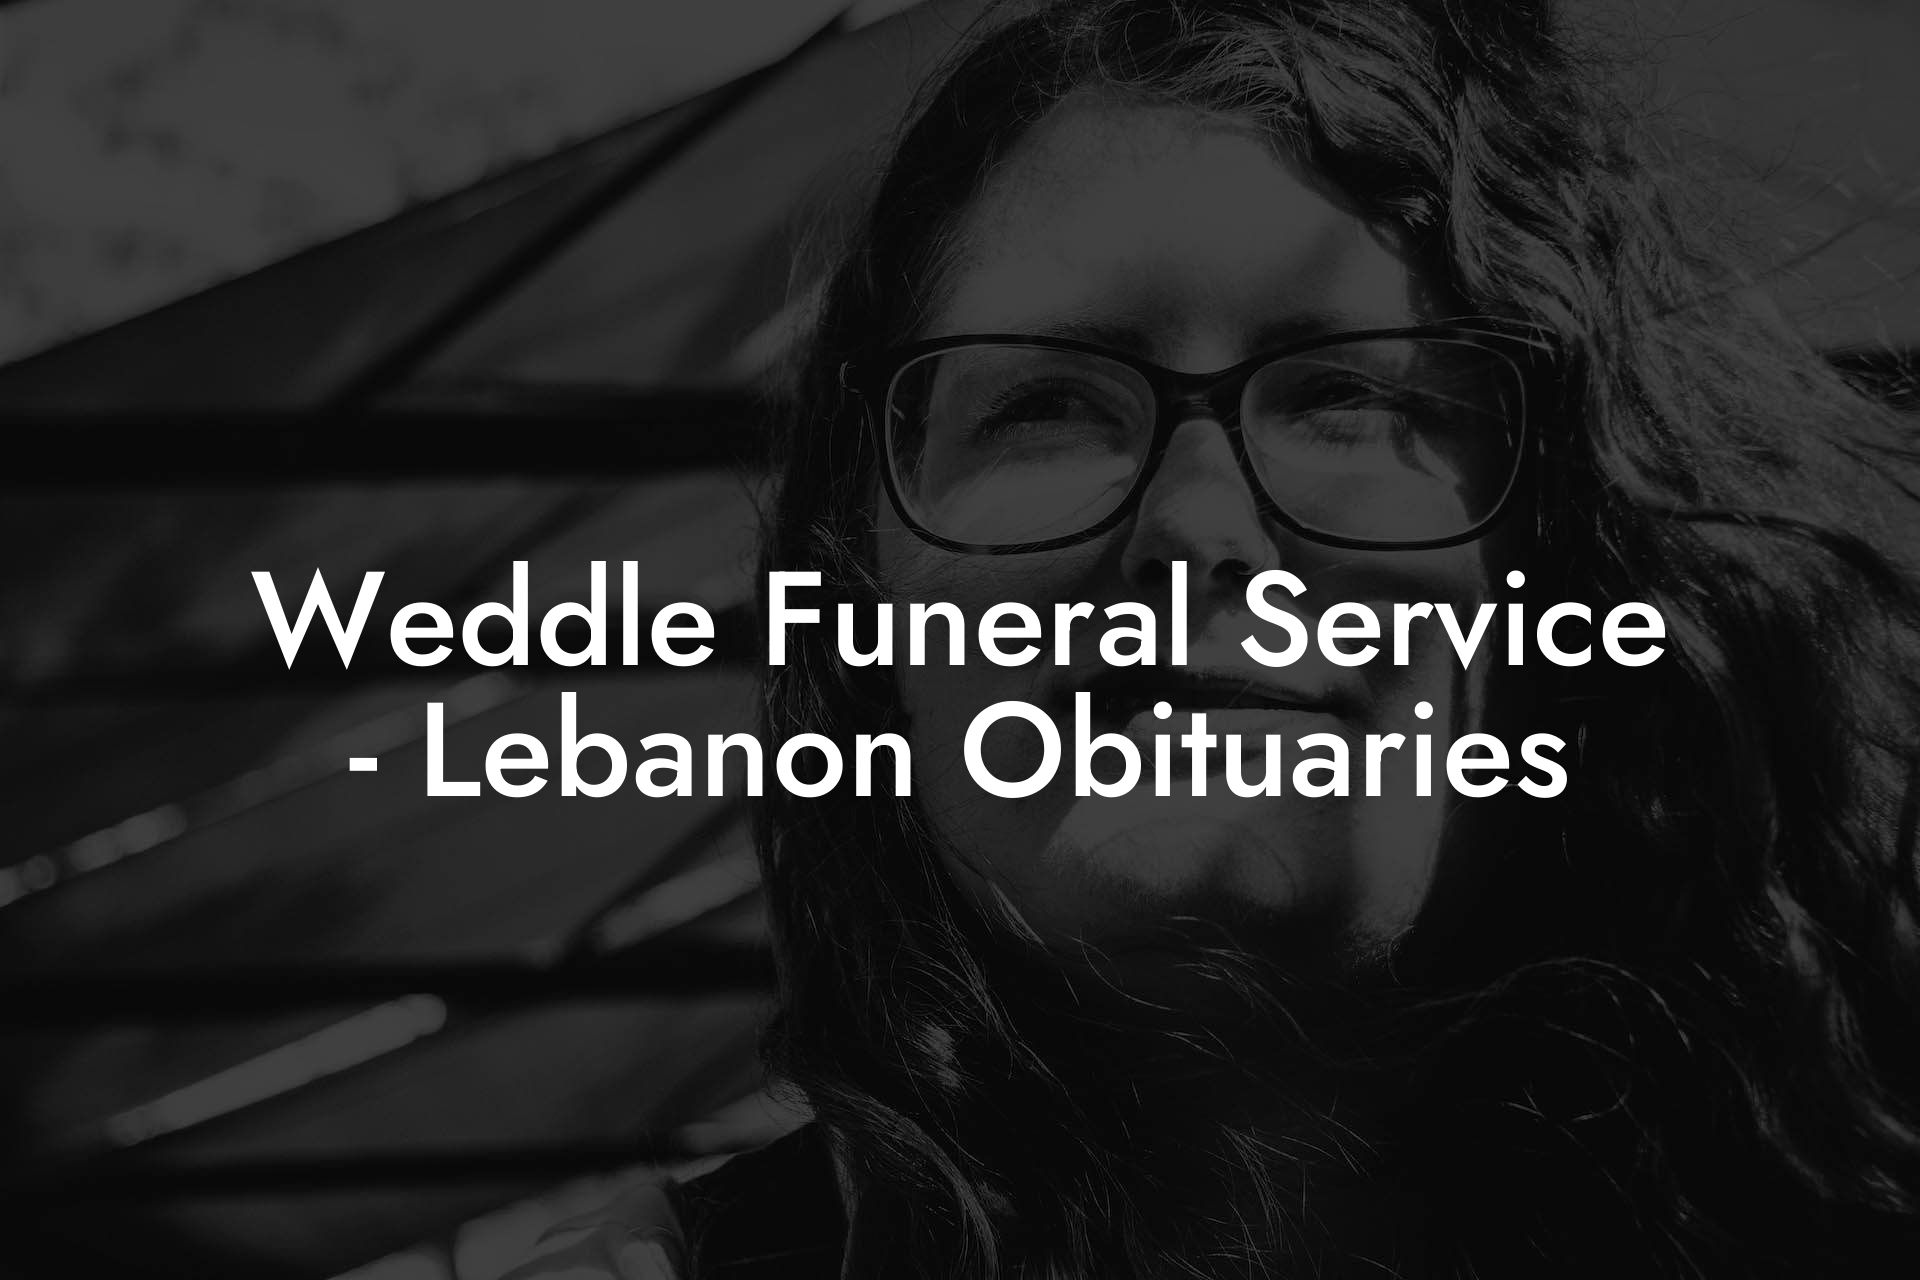 Weddle Funeral Service - Lebanon Obituaries